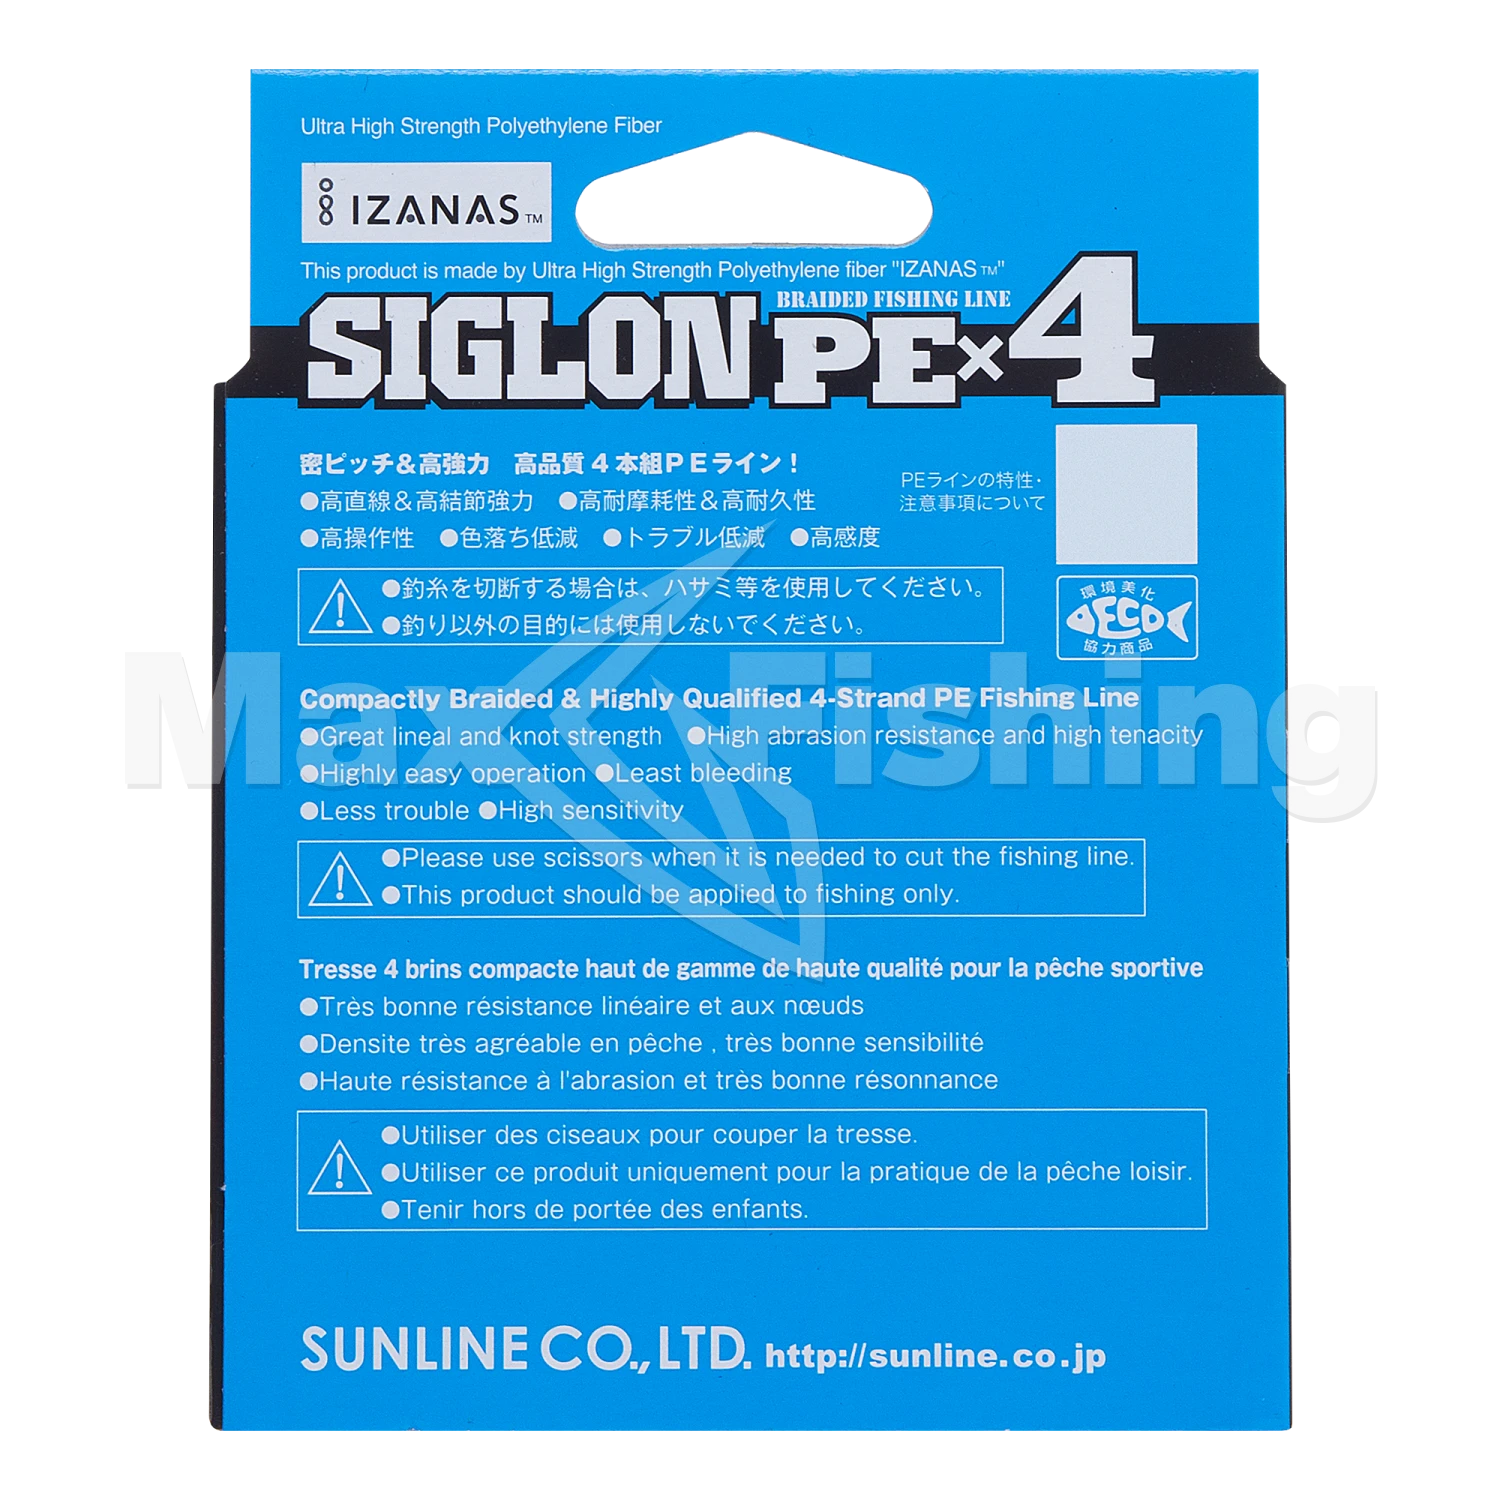 Шнур плетеный Sunline Siglon PE X4 #0,3 0,094мм 150м (light green)